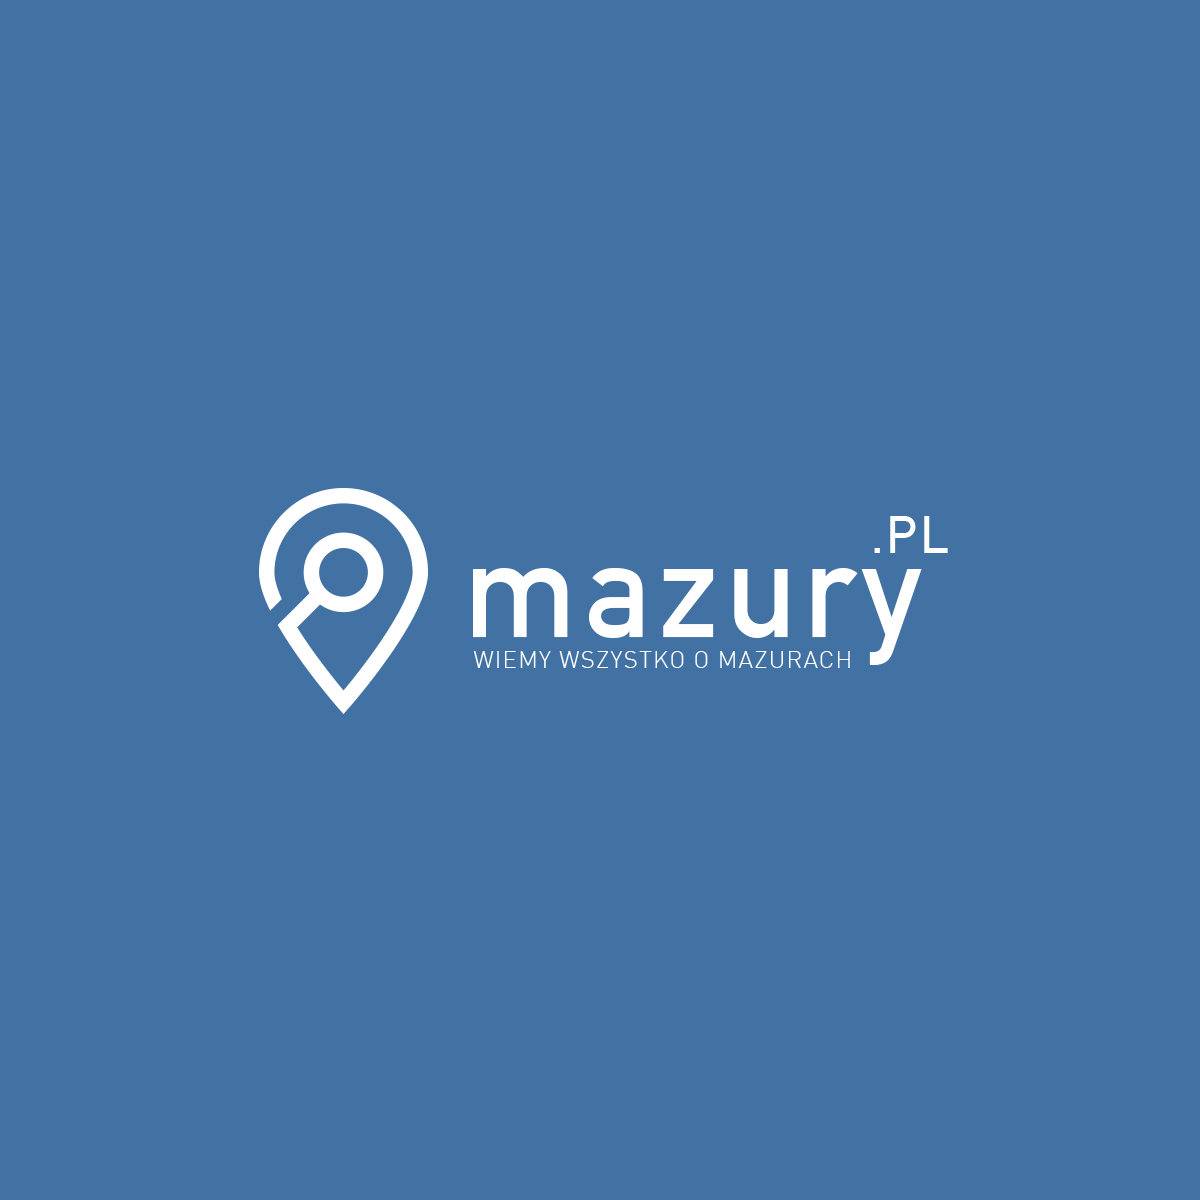 Website logo Mazury mazury.pl thomasonline.pl thomasonline